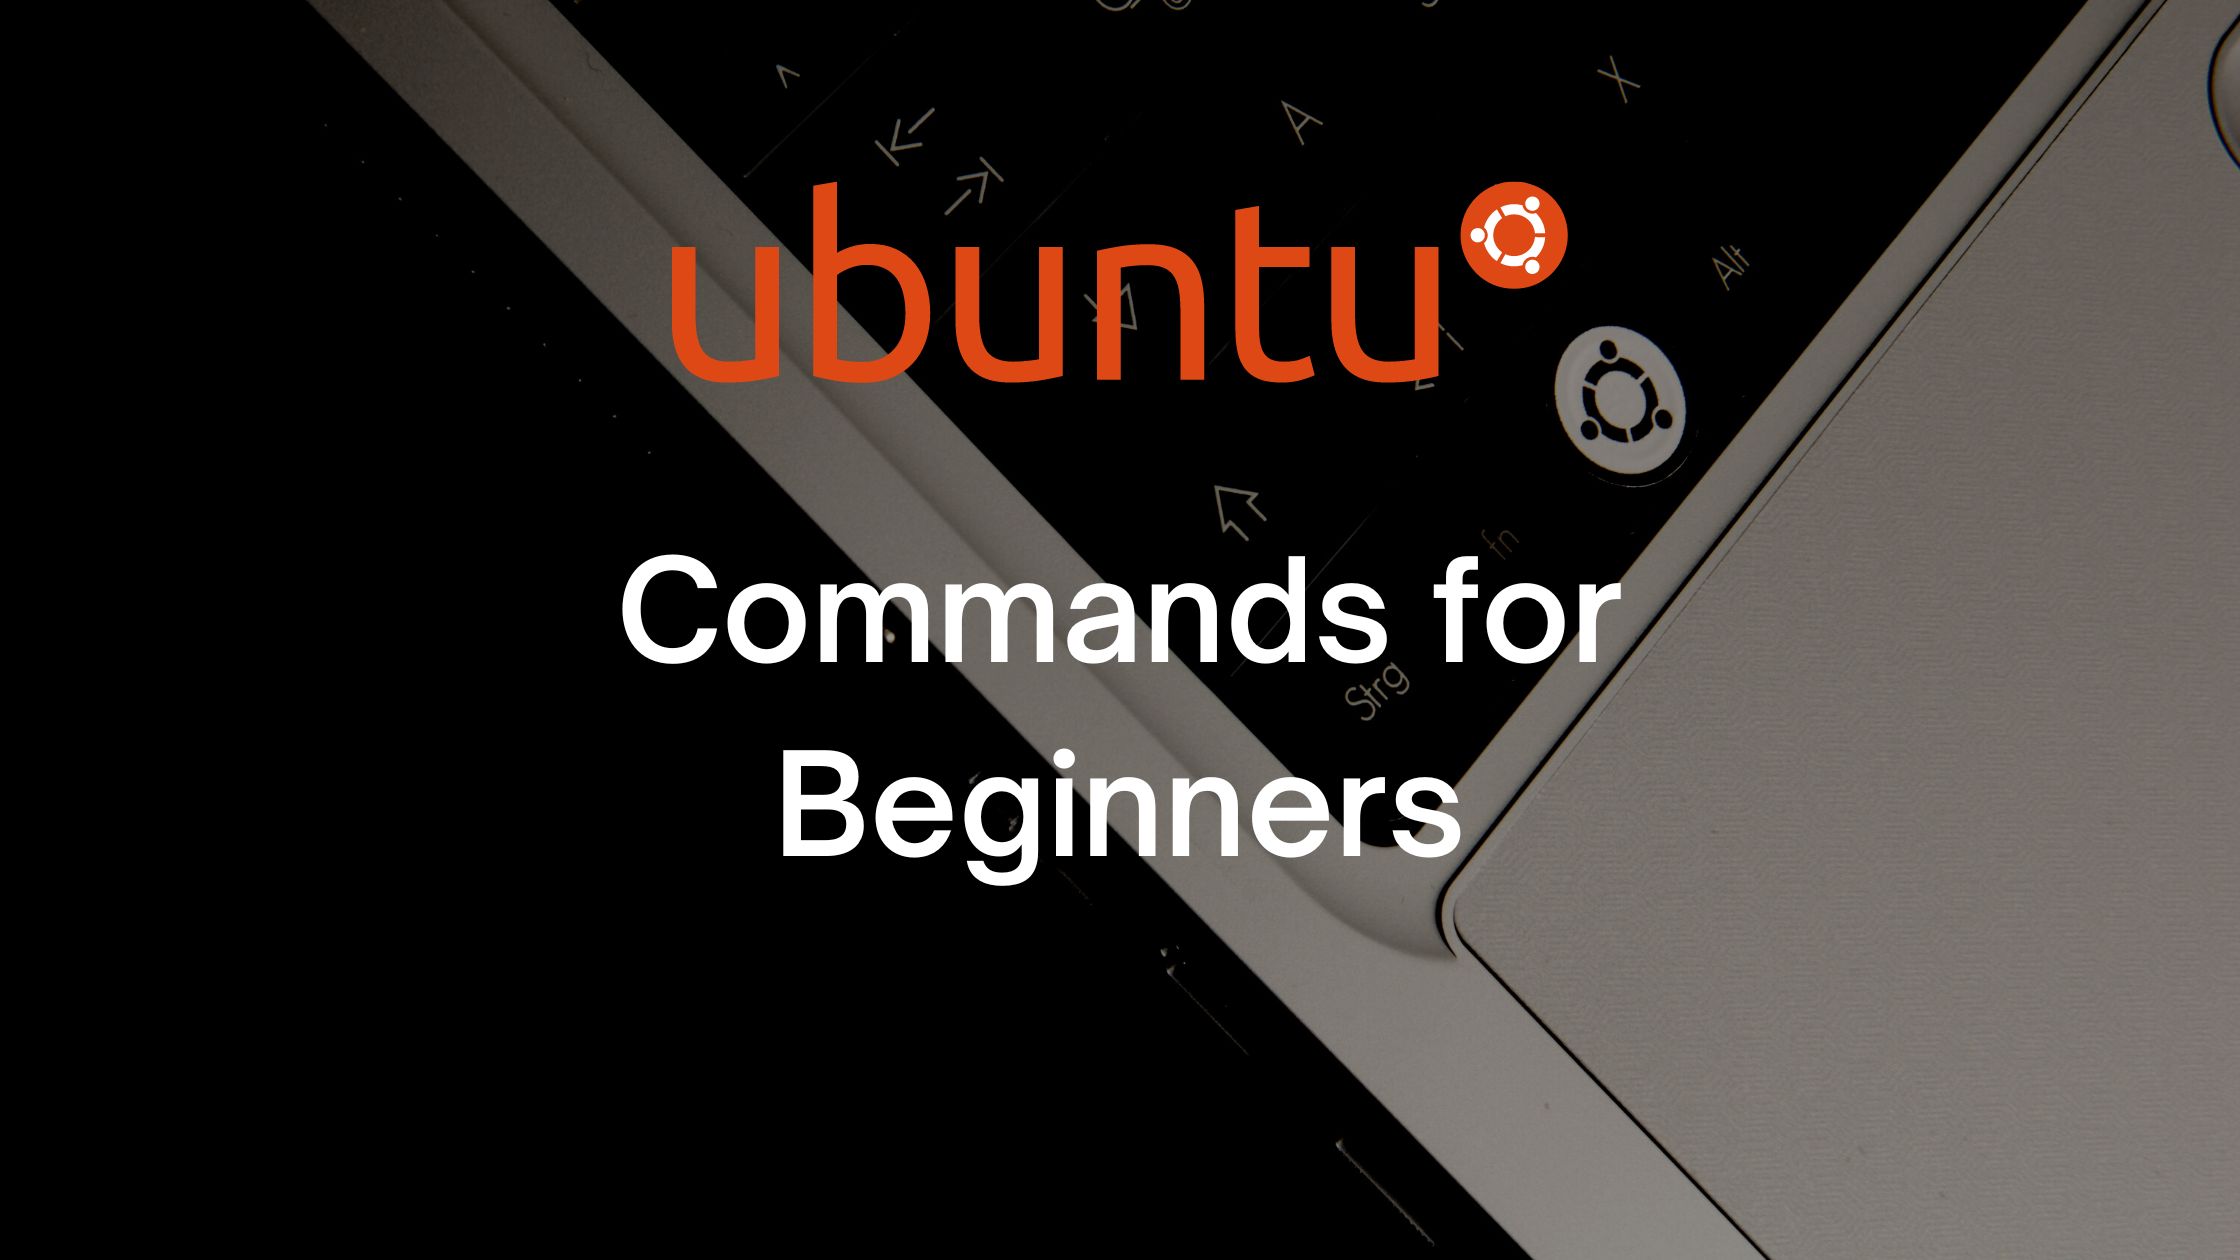 Ubuntu Commands for Beginners